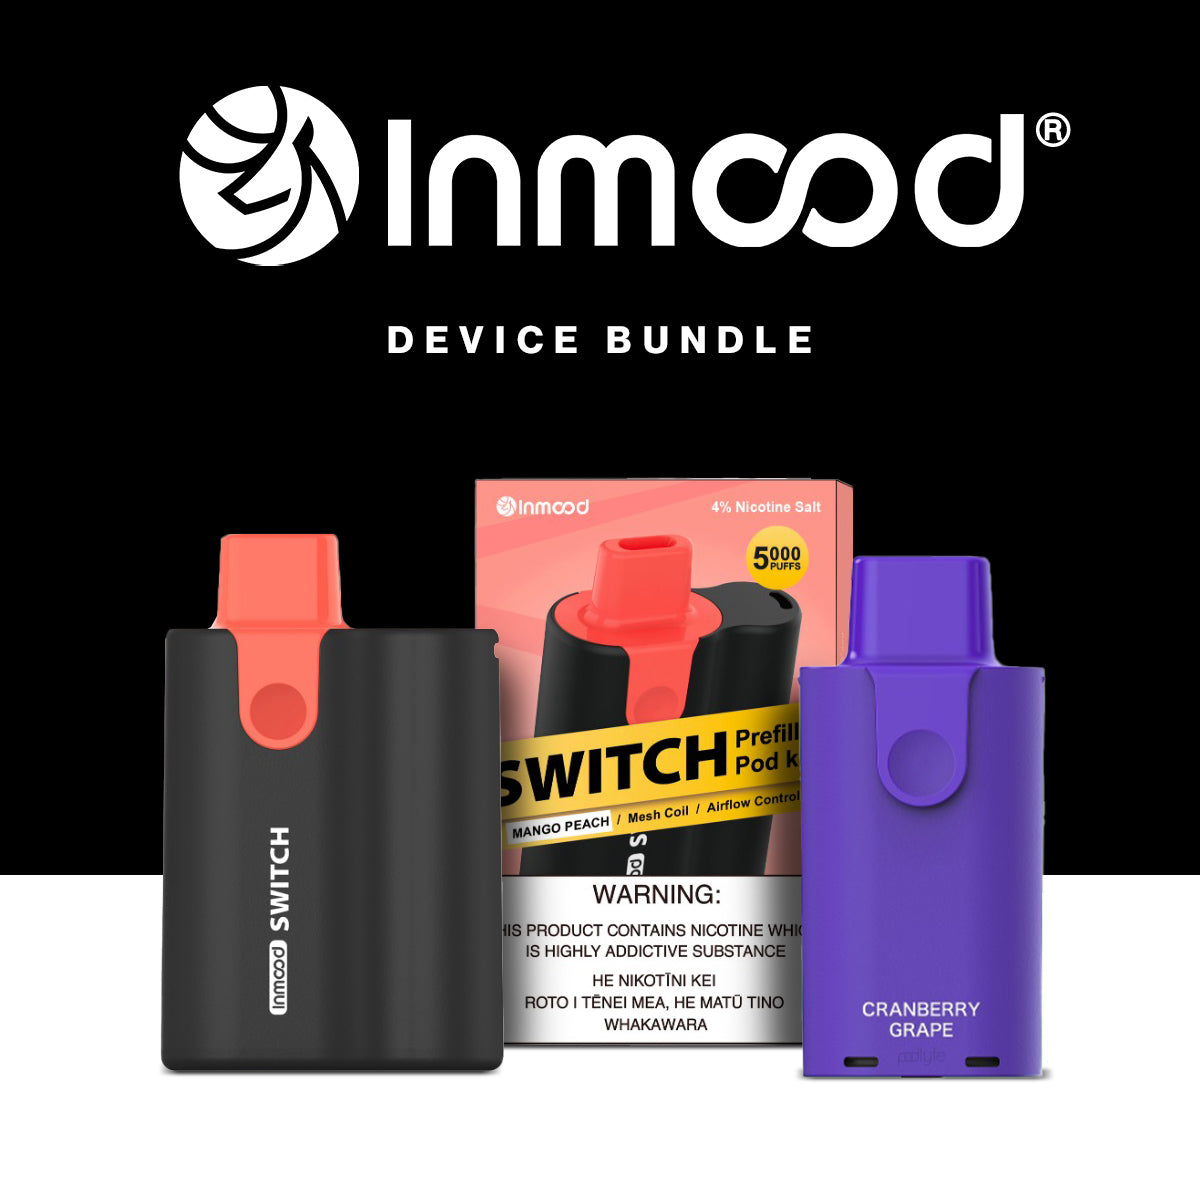 Inmood Switch